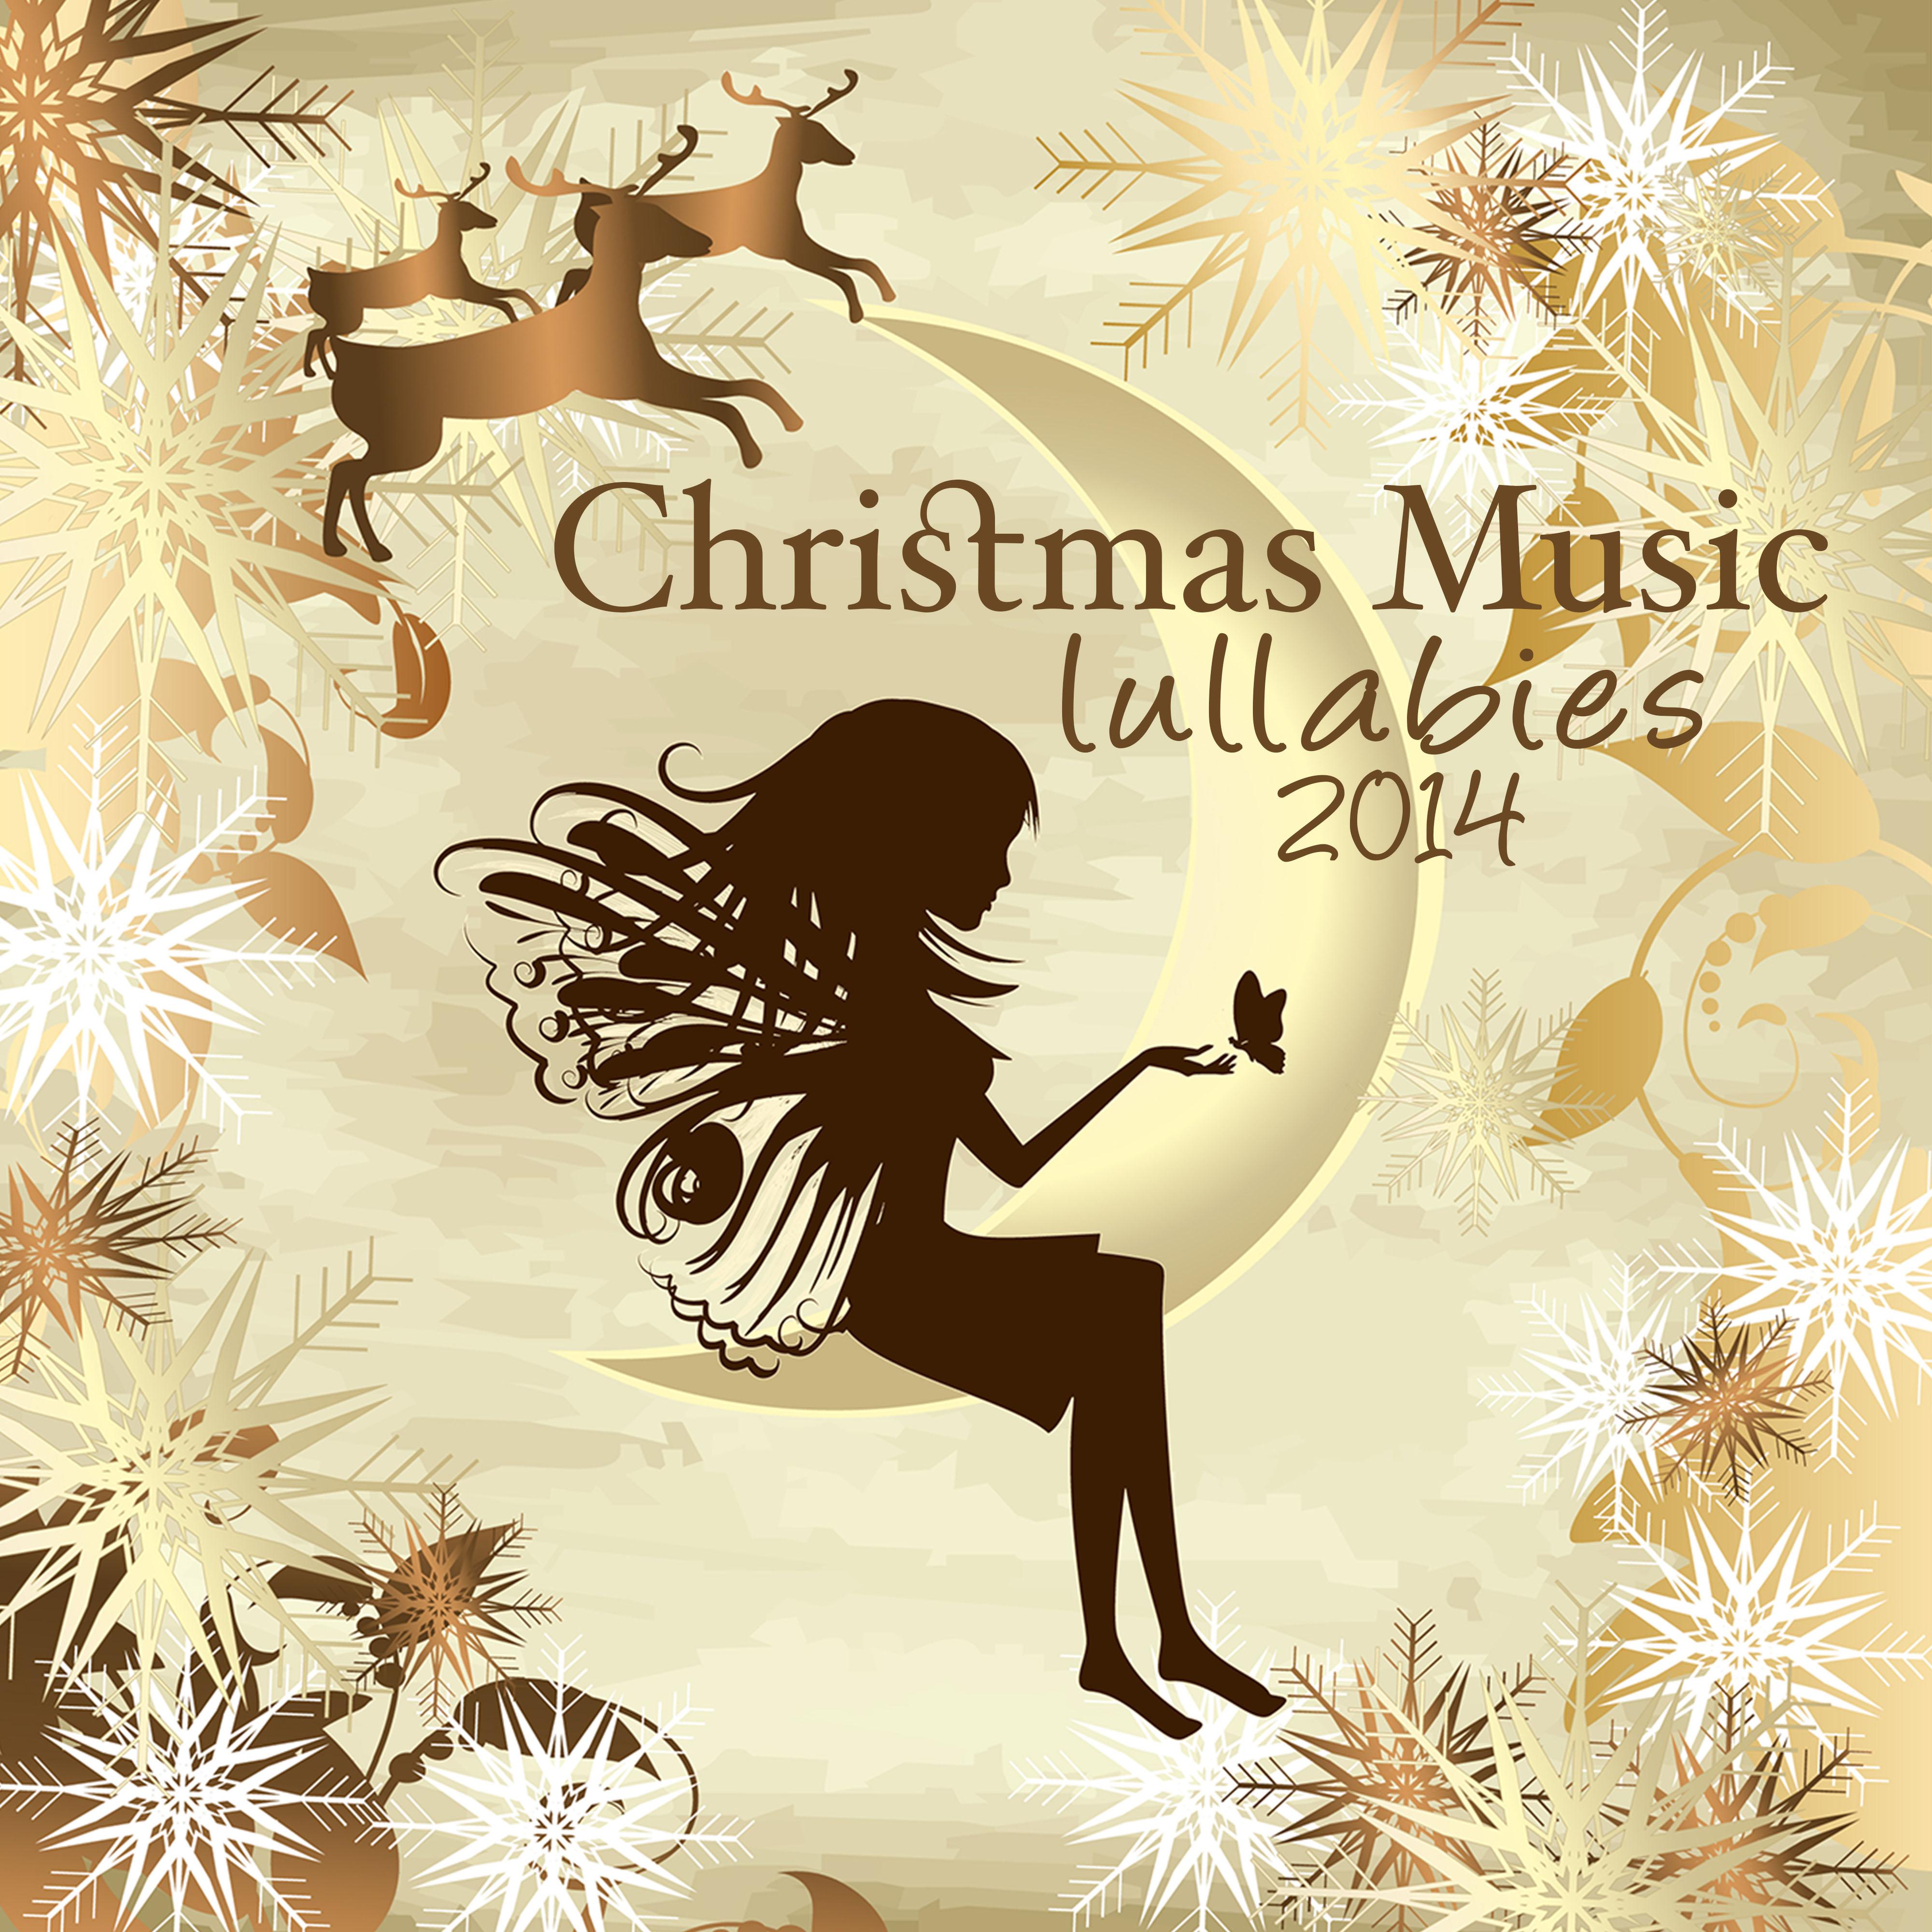 Christmas Music Lullabies 2014 – Soft Healing Nature Music & Traditional Christmas Songs for Baby Sleep, Classical Music Lullaby for Christmas Time